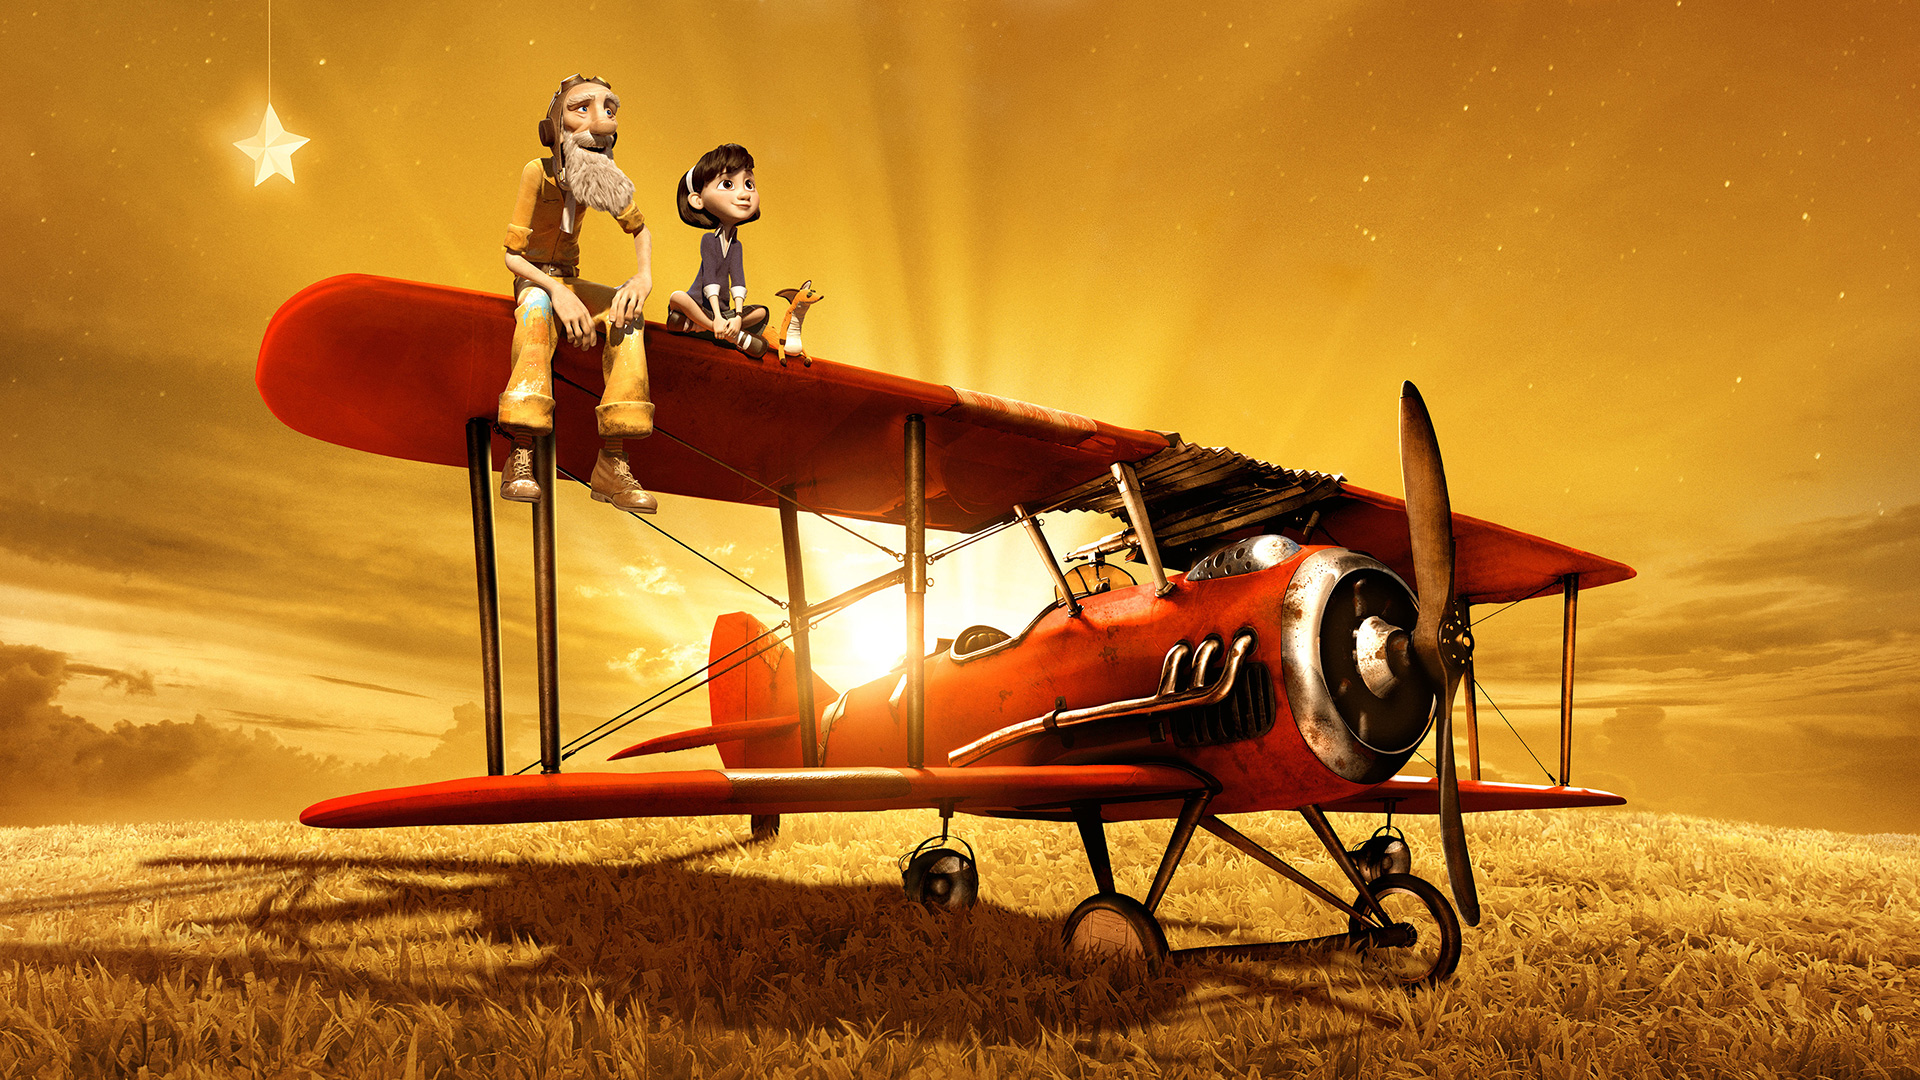 küçük prens wallpaper,airplane,aircraft,vehicle,biplane,aviation